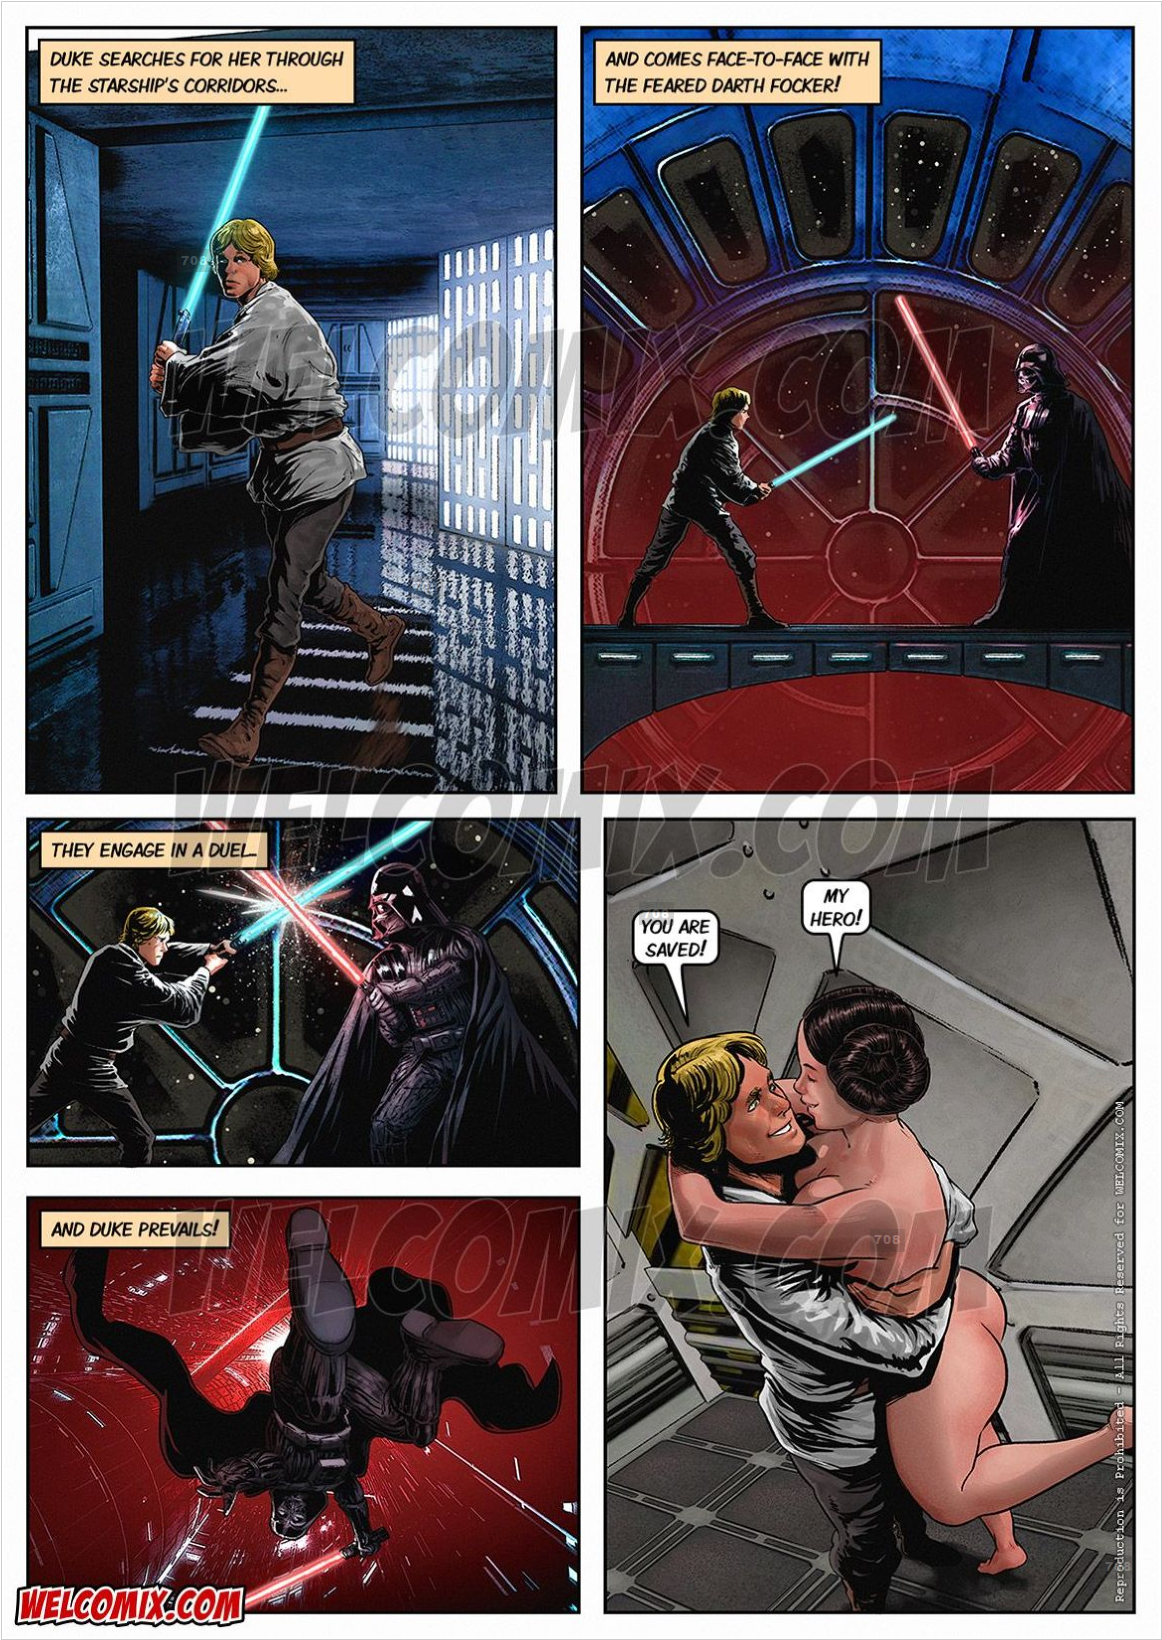 BlockBuster-Comics-03-Star-Wars-English-page15--Gotofap.tk--81435047.png